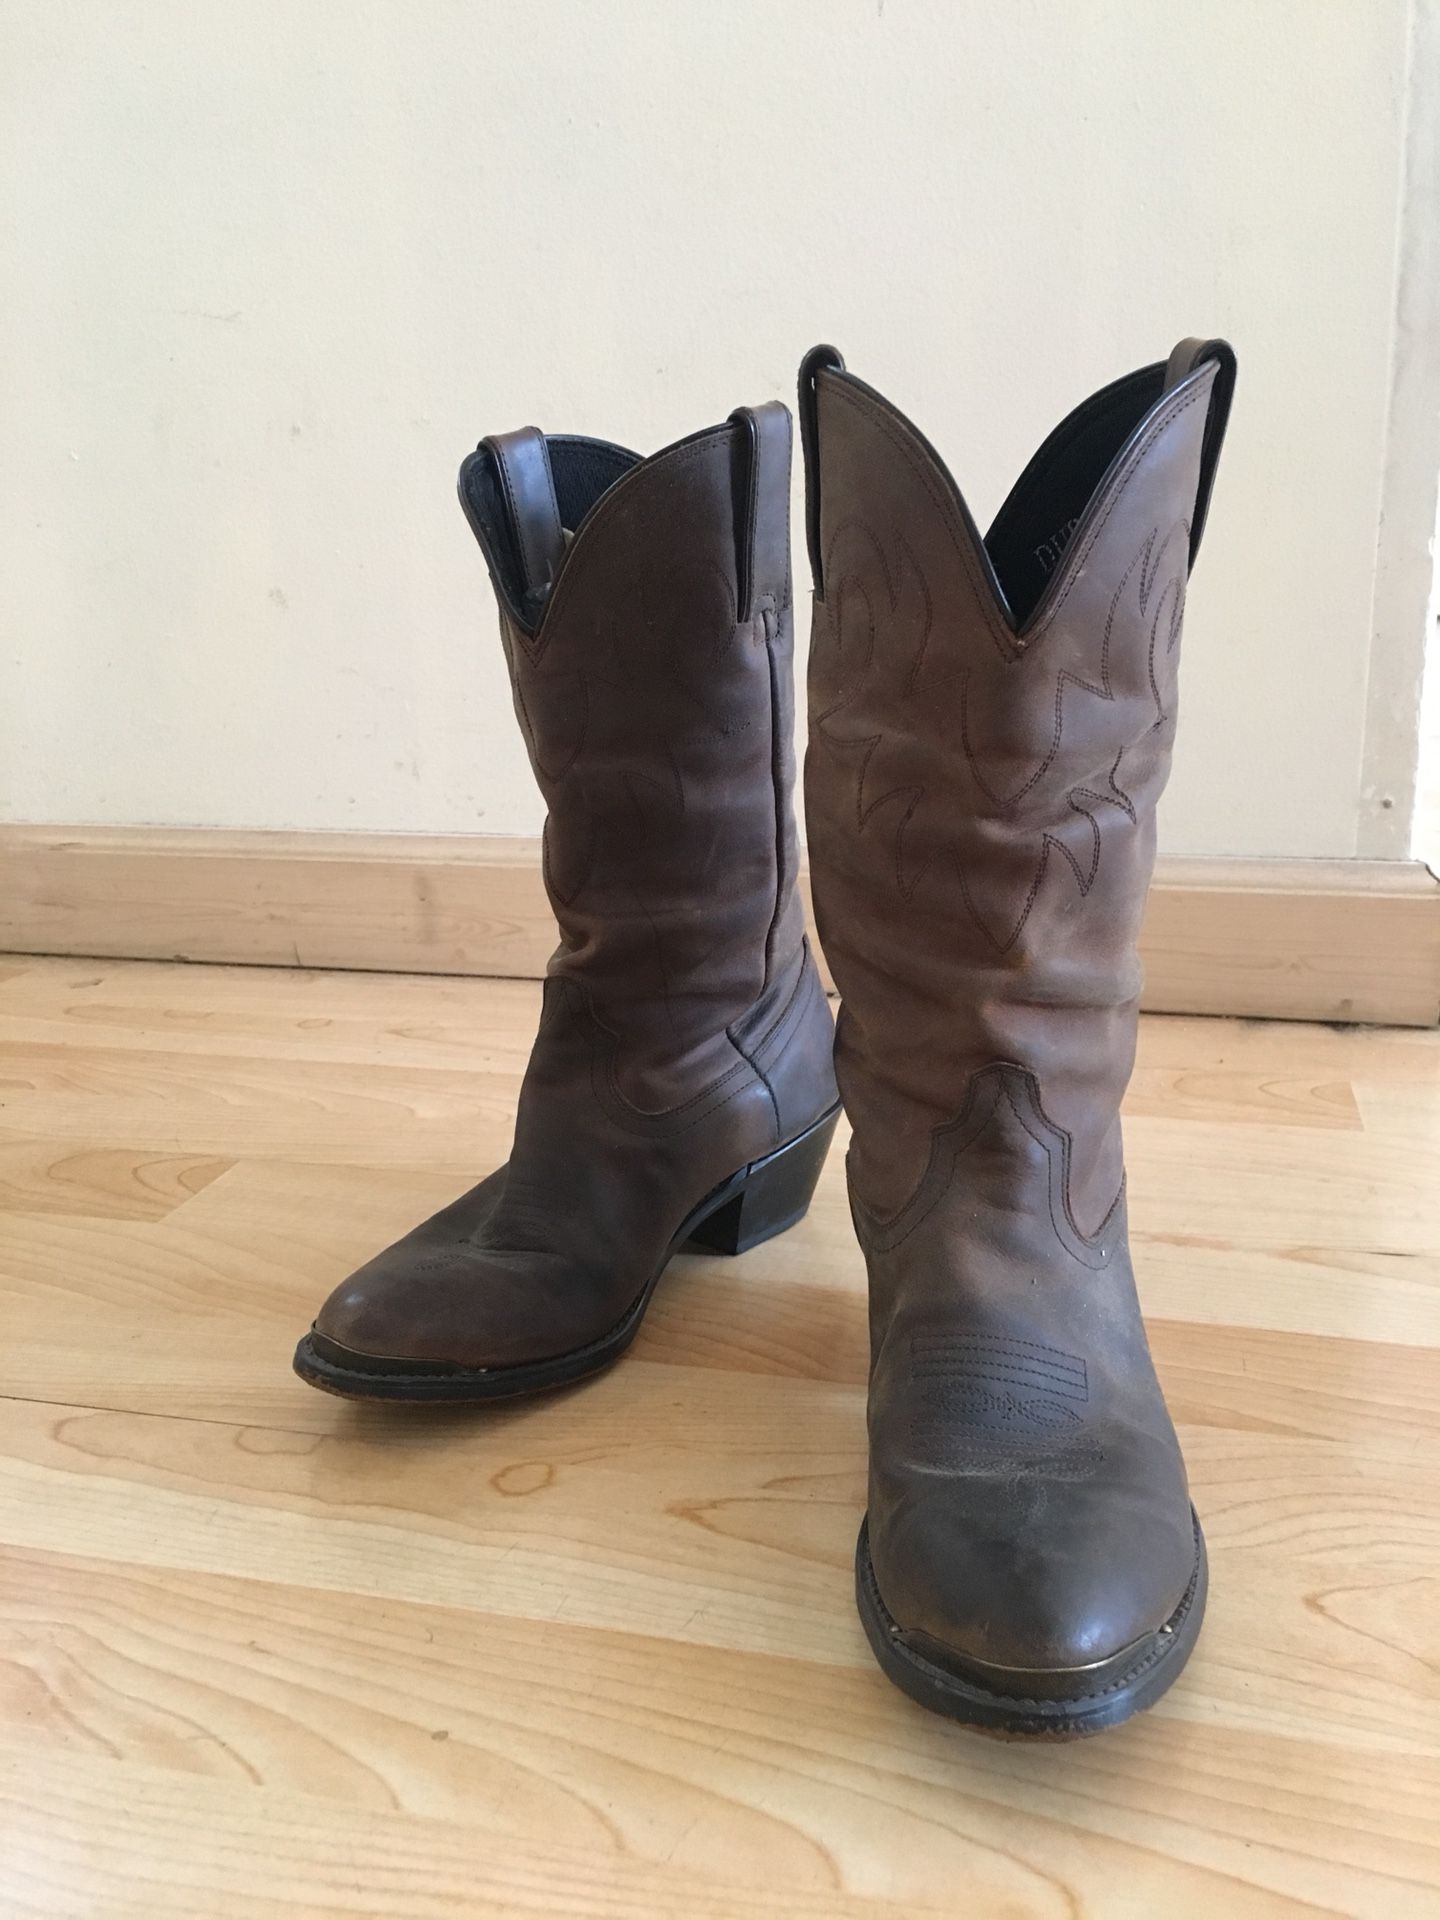 Beautiful Leather Cowboy Boots w/ Details - Women’s 7